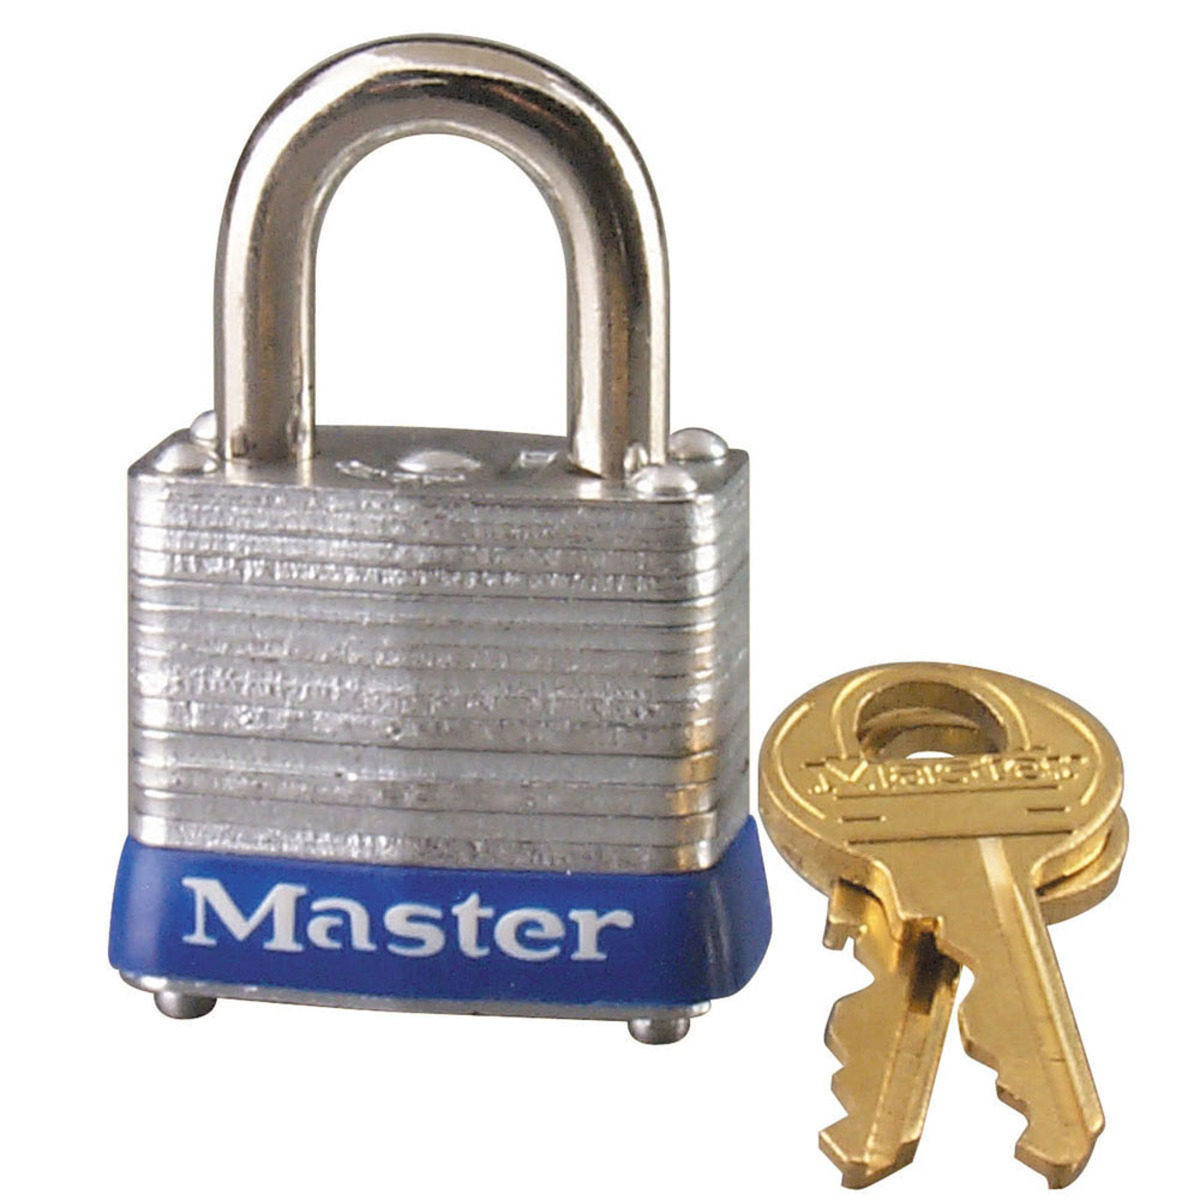 Master Lock® Silver Laminated Steel General Security Padlock Hardened Steel Shackle